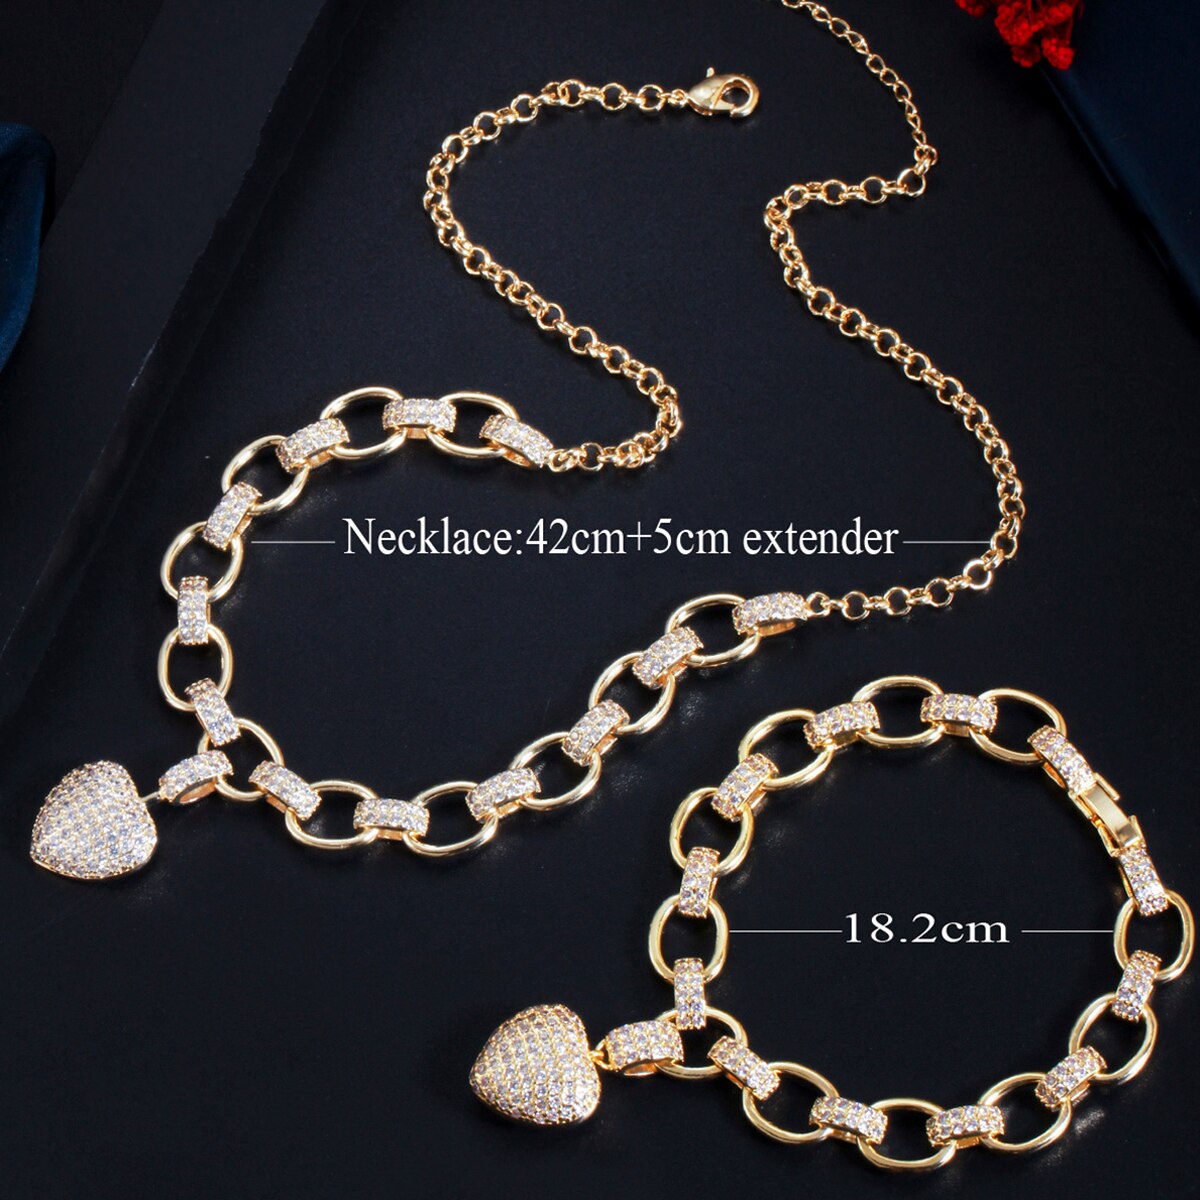 ThreeGraces-Luxury-Cubic-Zirconia-Stone-Yellow-Gold-Color-Love-Heart-Pendant-Necklace-Bracelet-Set-f-1005003297996366-3